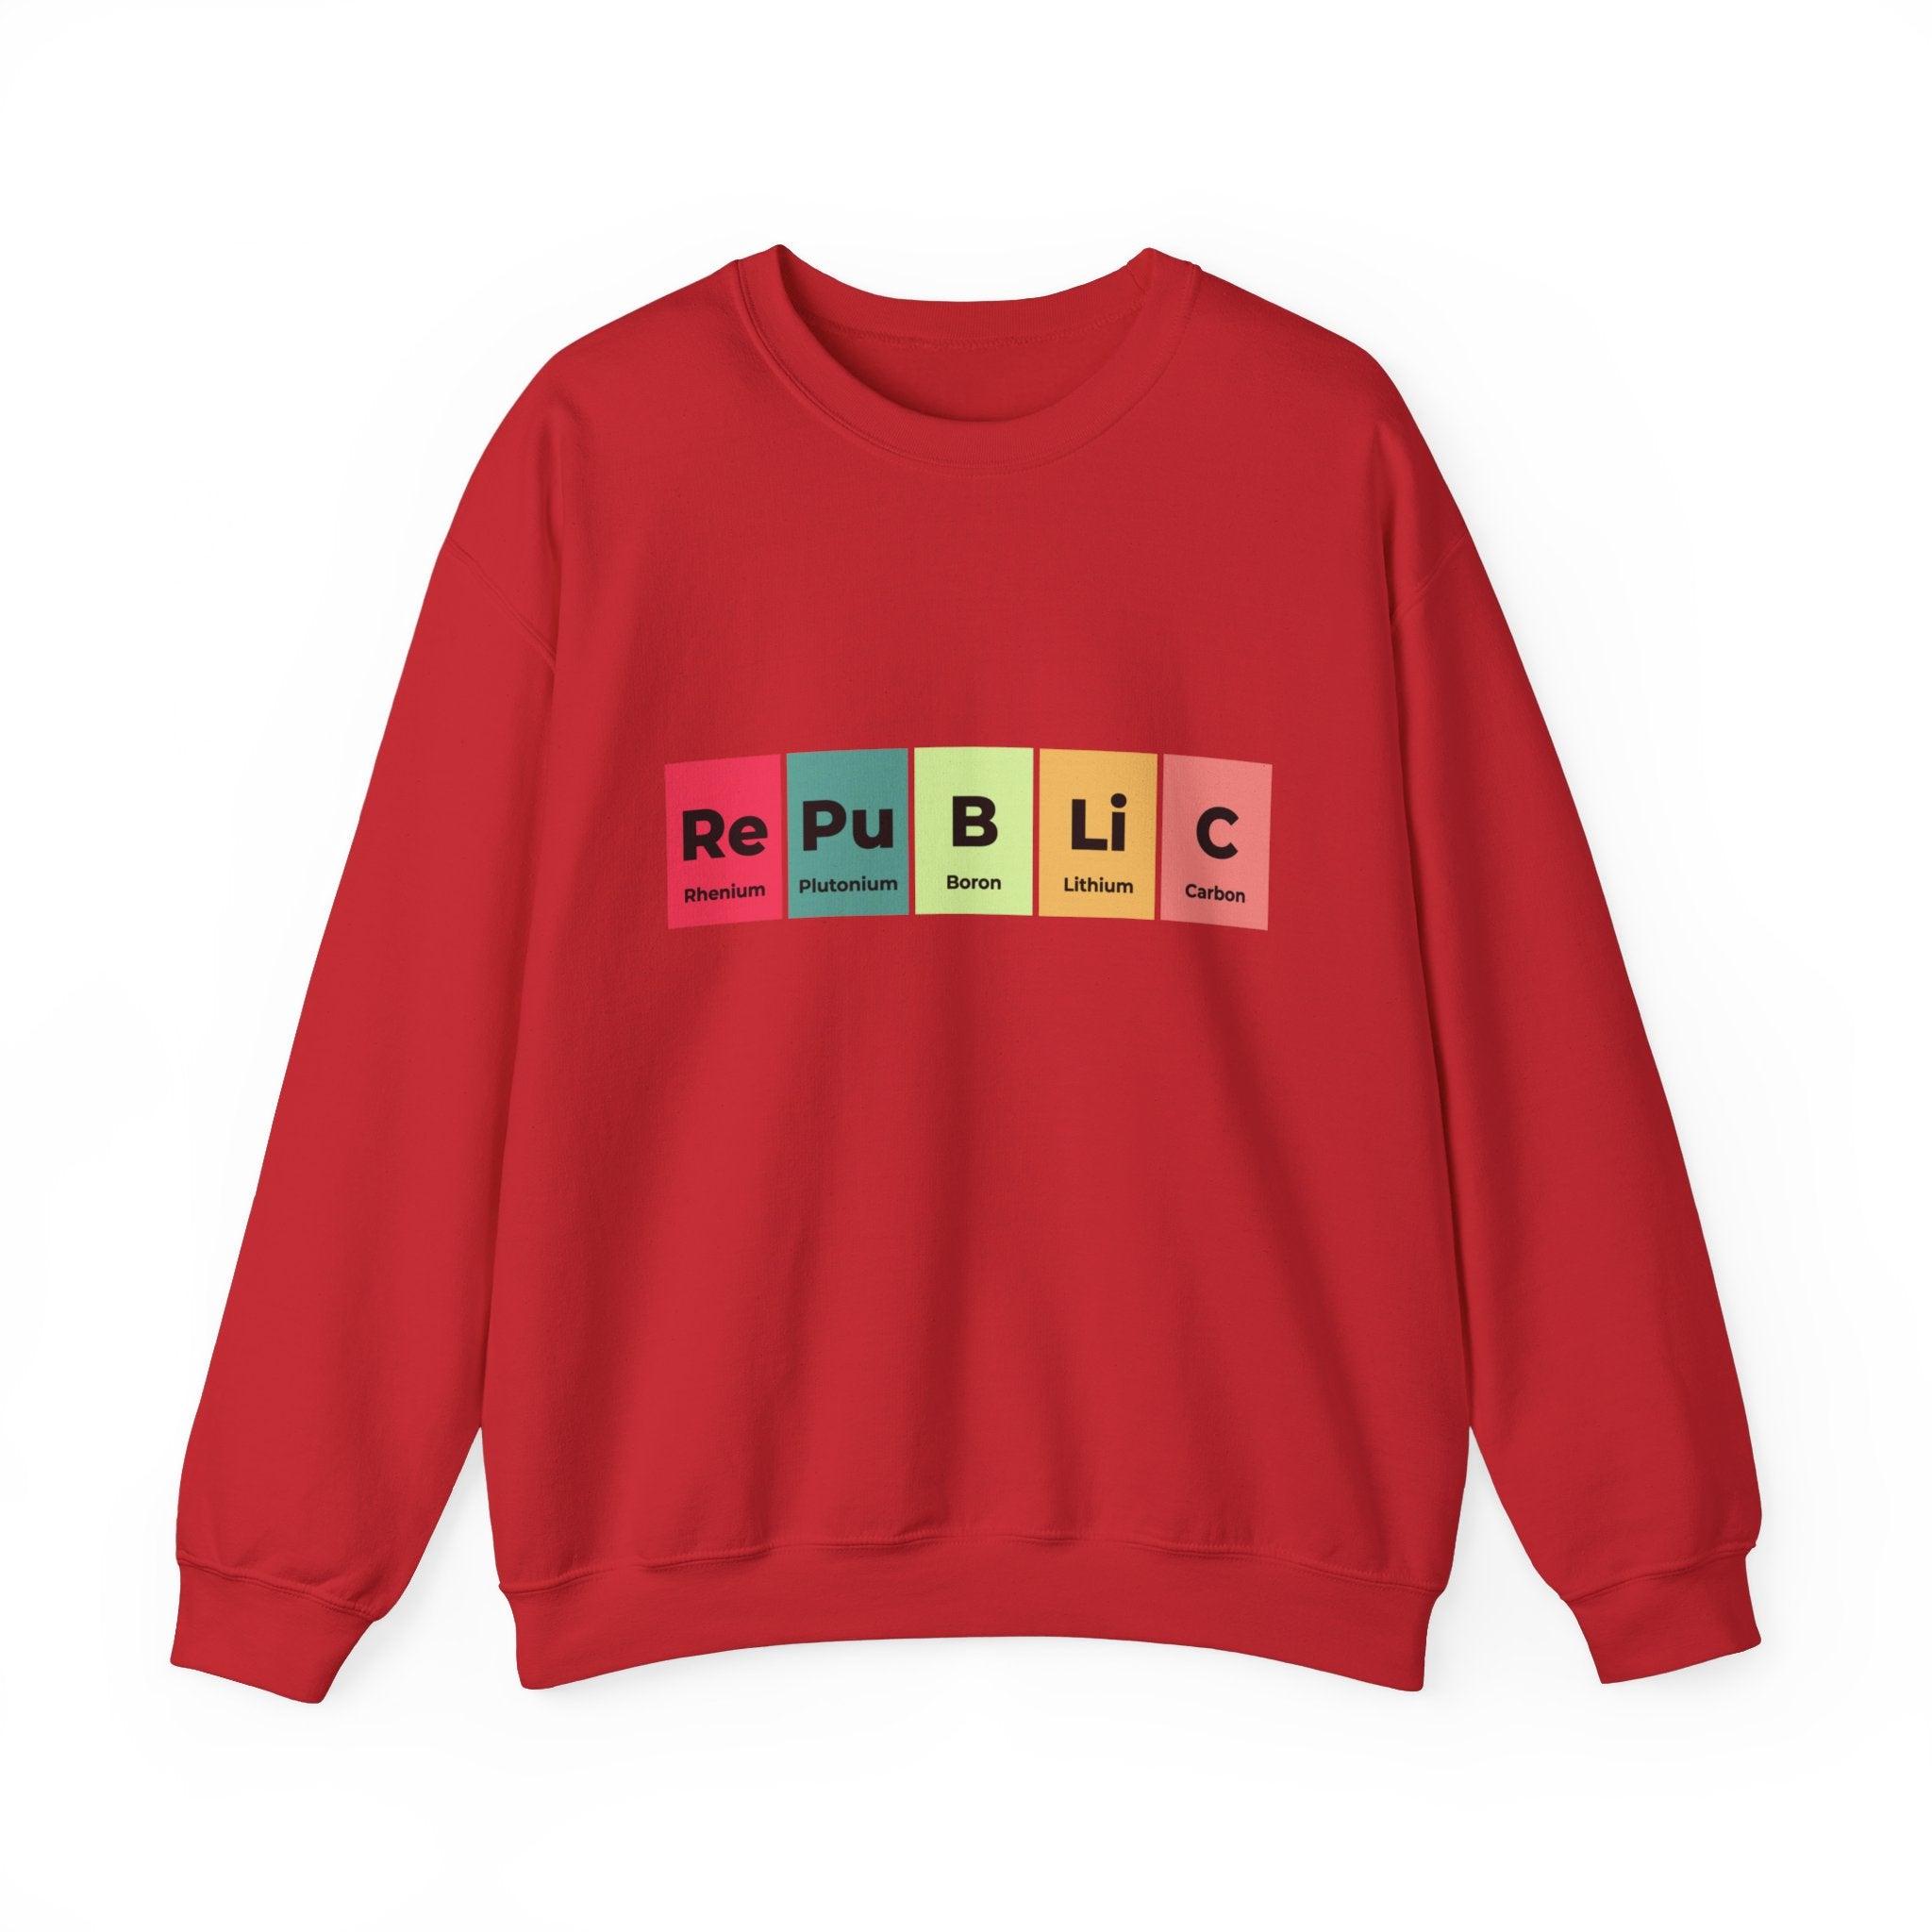 A cozy Republic - Sweatshirt for winter fashion, featuring the word "Republic" in a vibrant periodic table design.